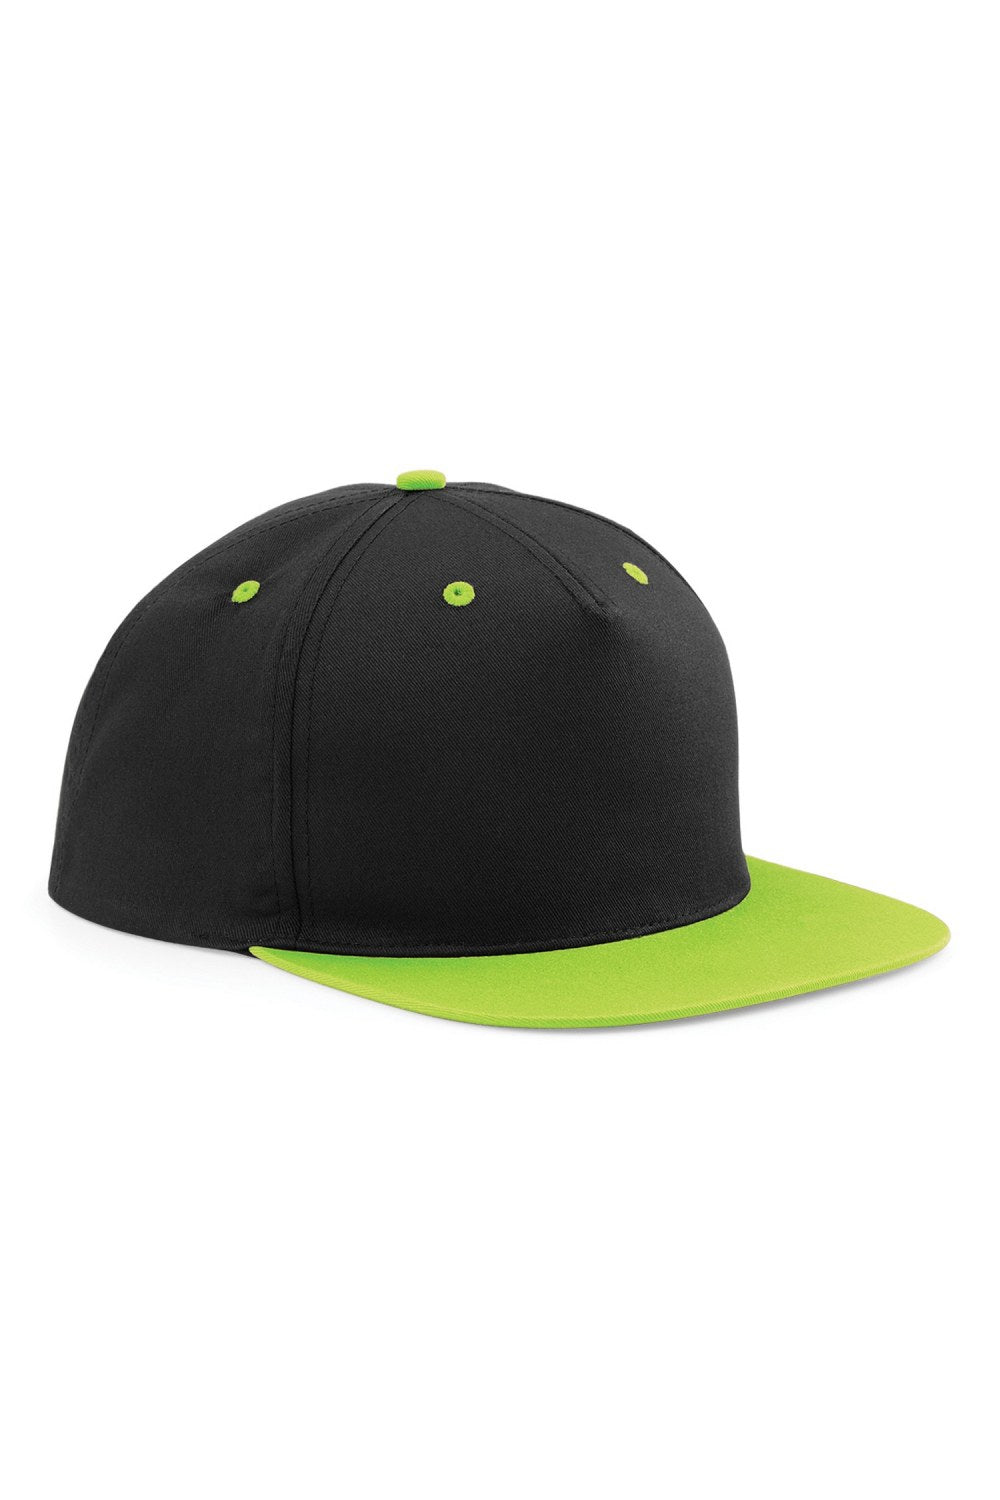 Beechfield Unisex 5 Panel Contrast Snapback Cap (Black/ Lime Green)